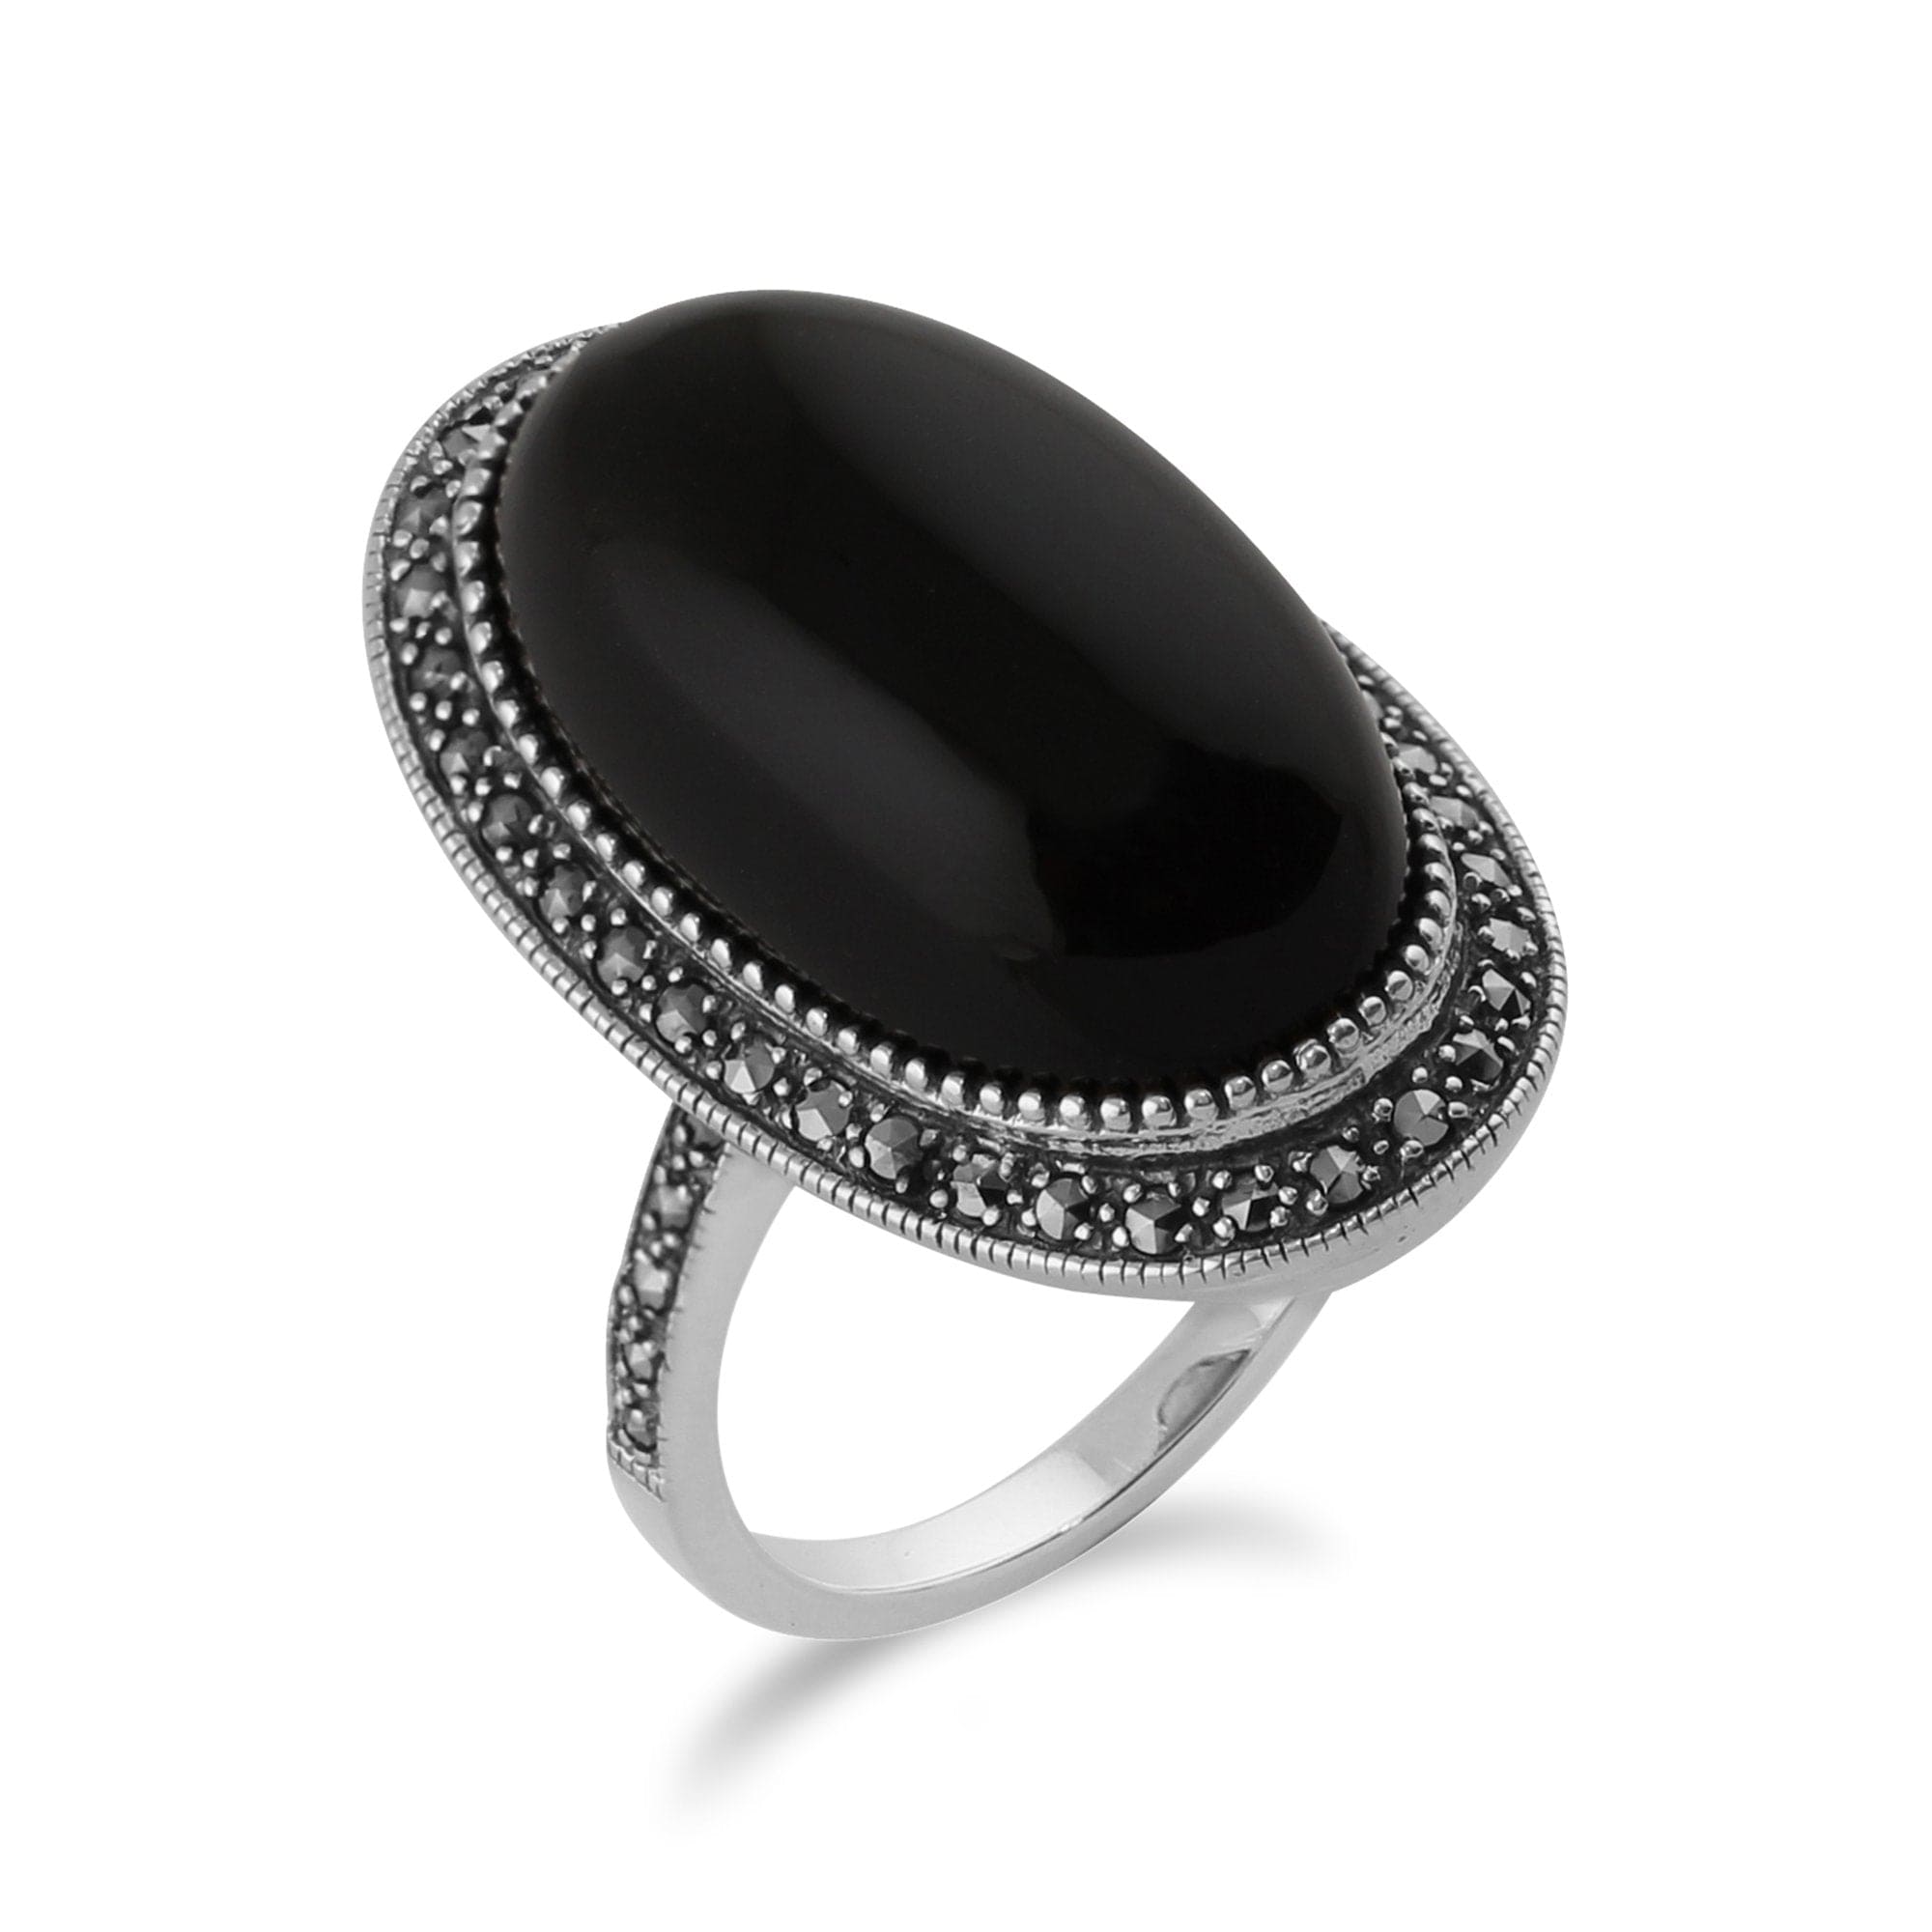 Art Deco Style Black Onyx Cabochon & Marcasite Cocktail Ring - Gemondo